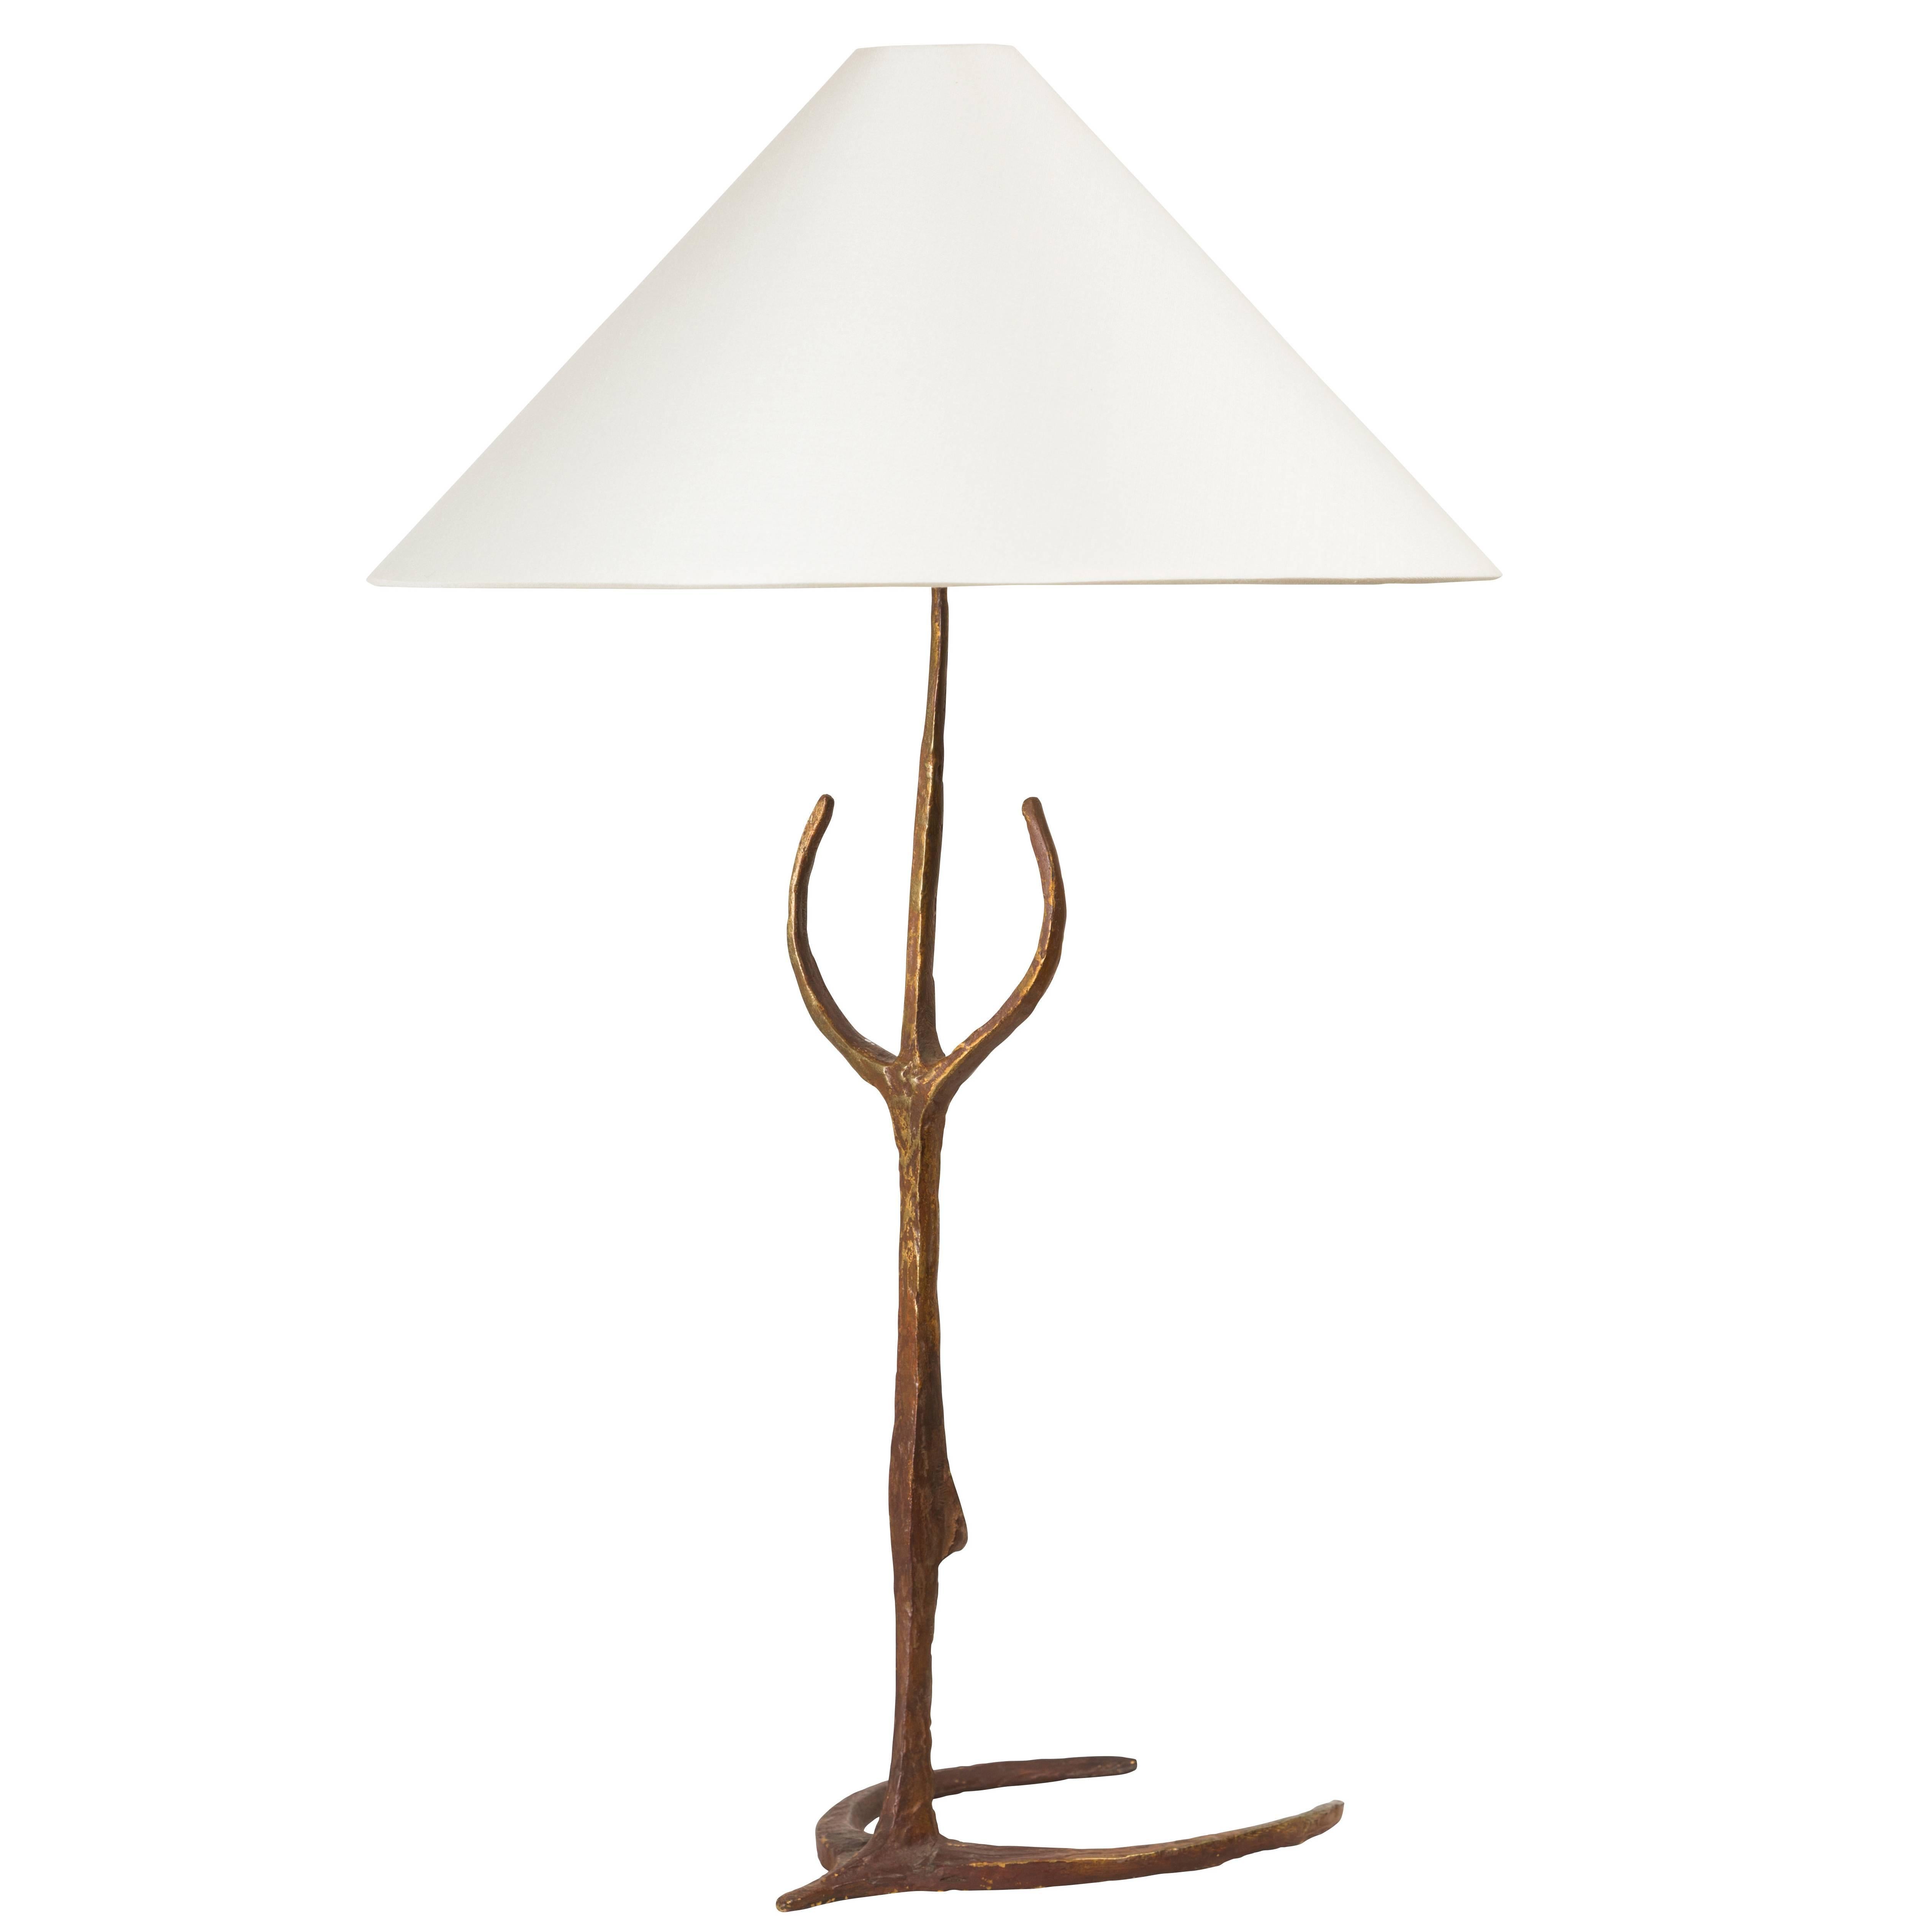 Felix Agostini Table Lamp